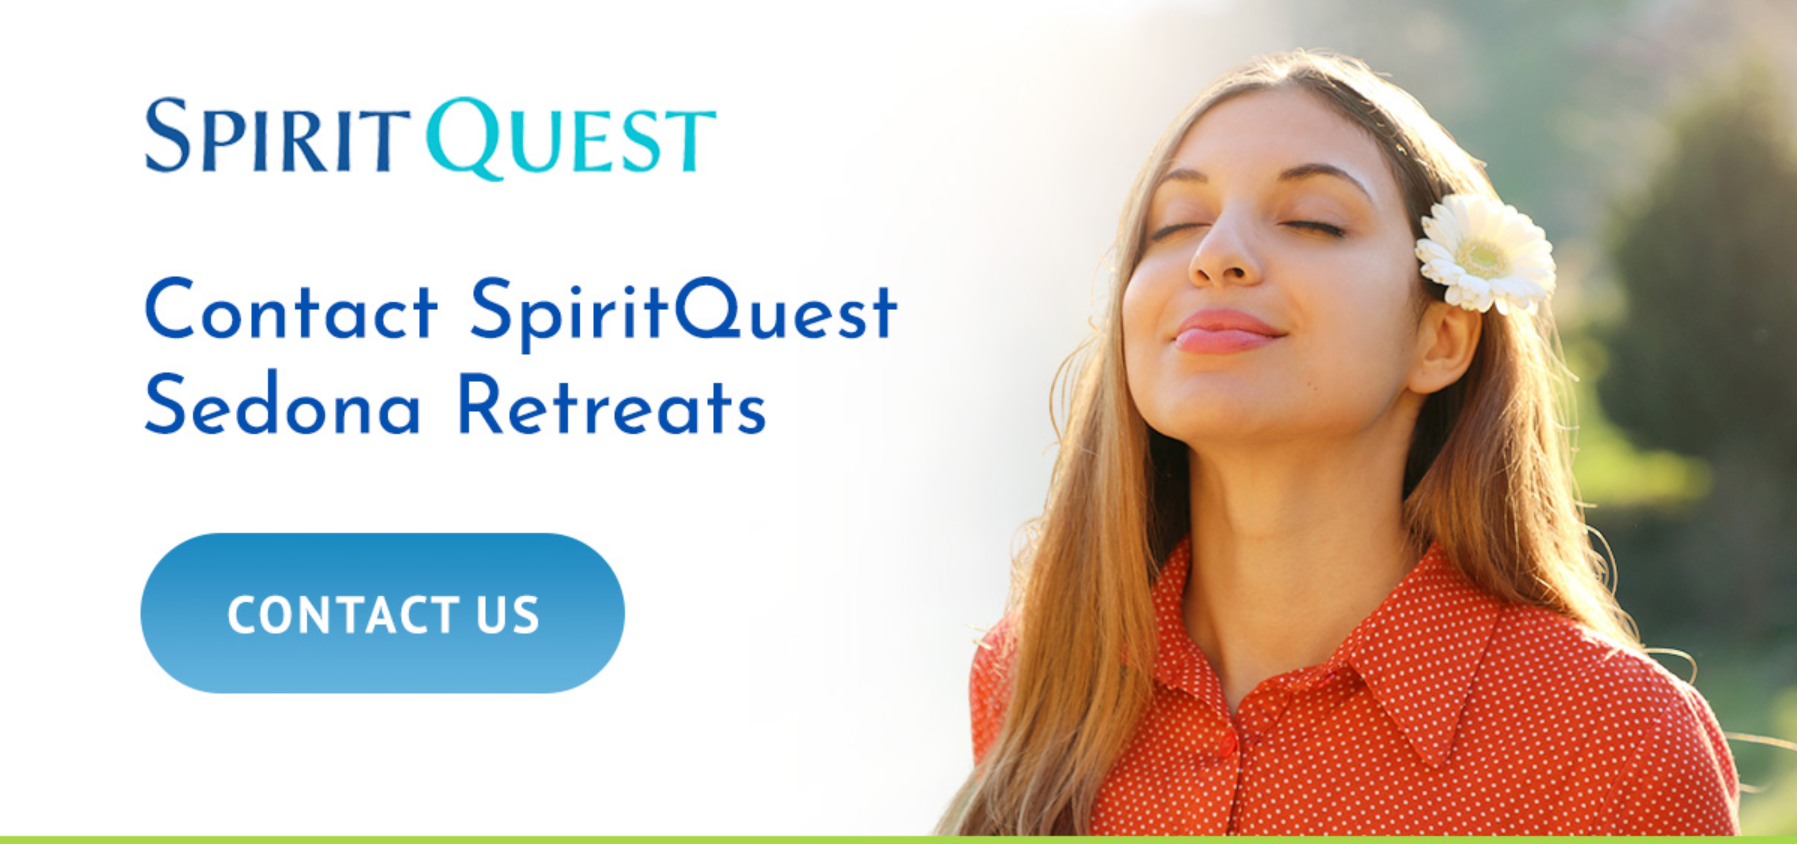 Contact SpiritQuest Sedona Retreats